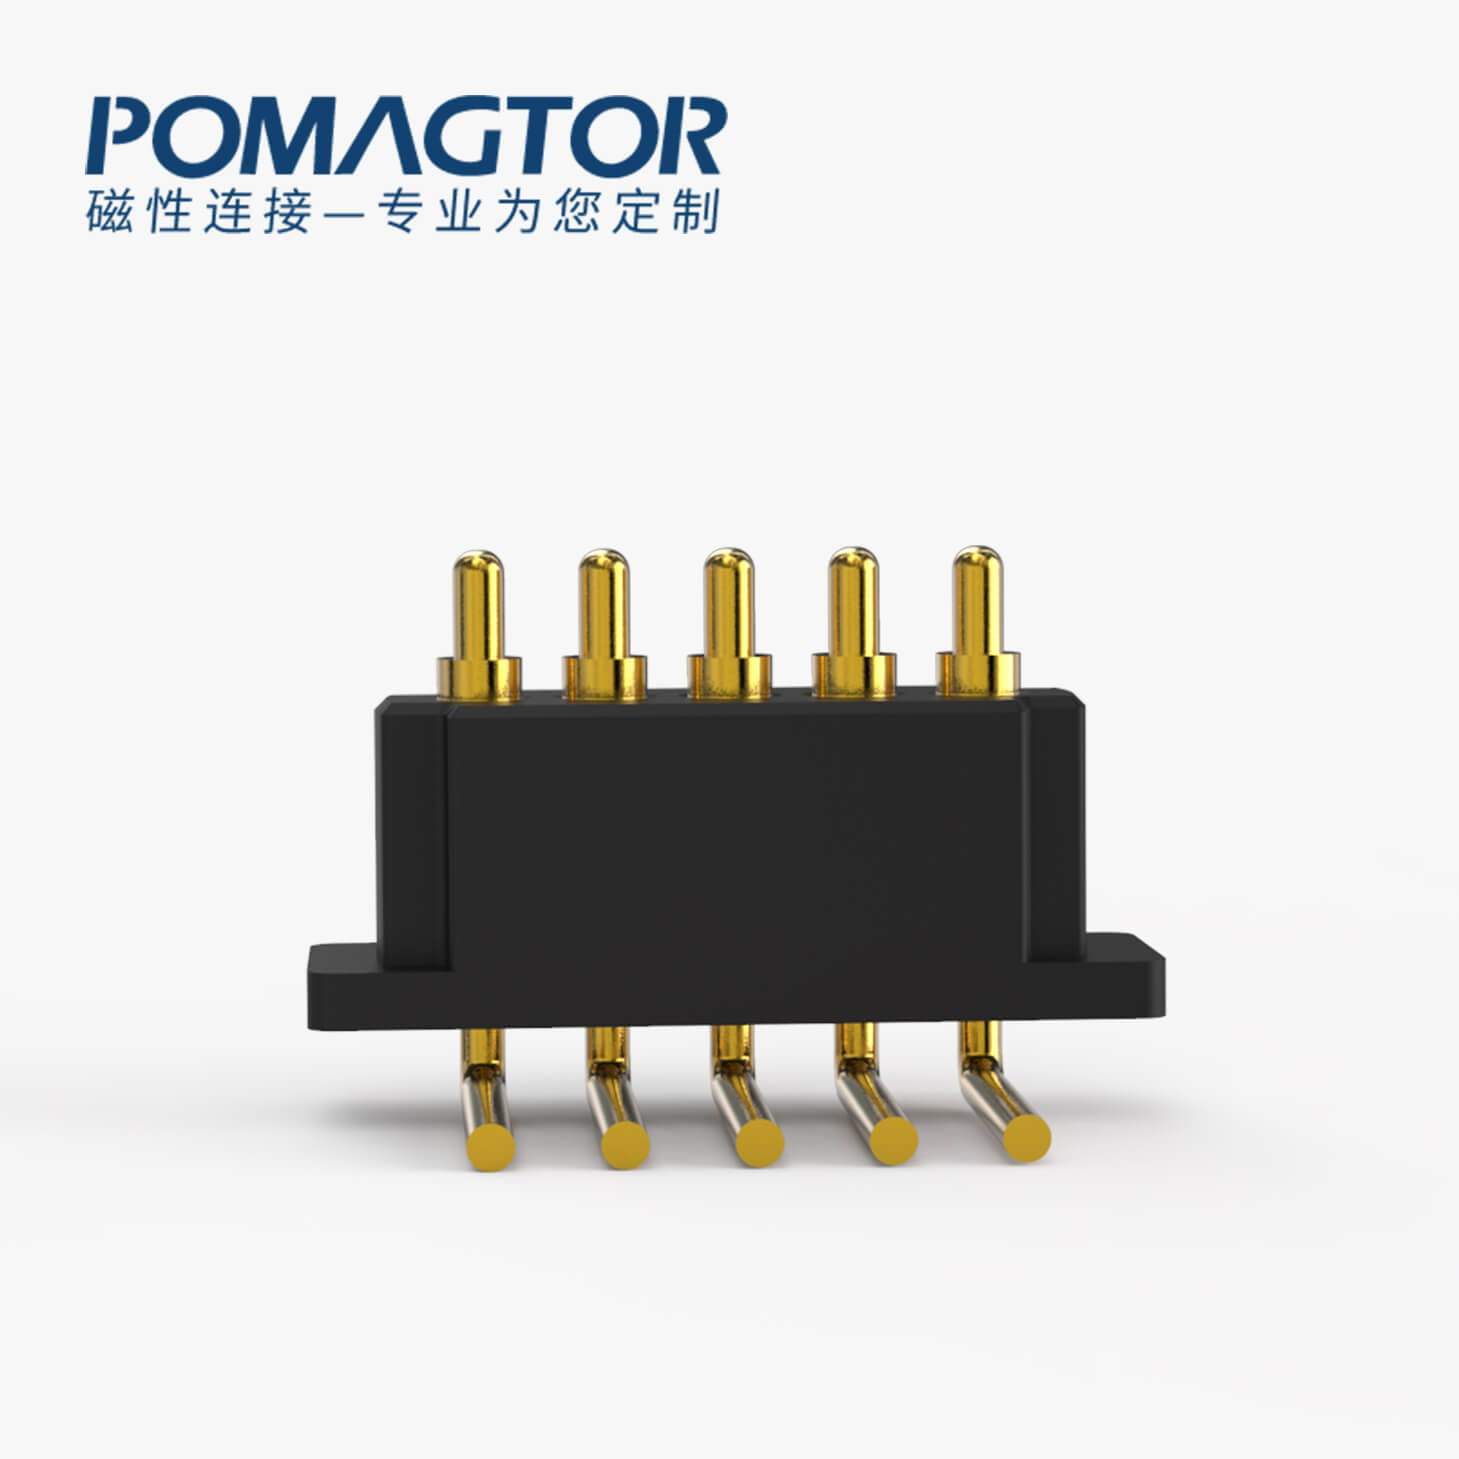 POGO PIN连接器 折弯式：5PIN，电镀黄铜Au5u，电压12V，电流8A，工作行程1.5mm:60±20gf，弹力10000次+，工作温度-30°~85°